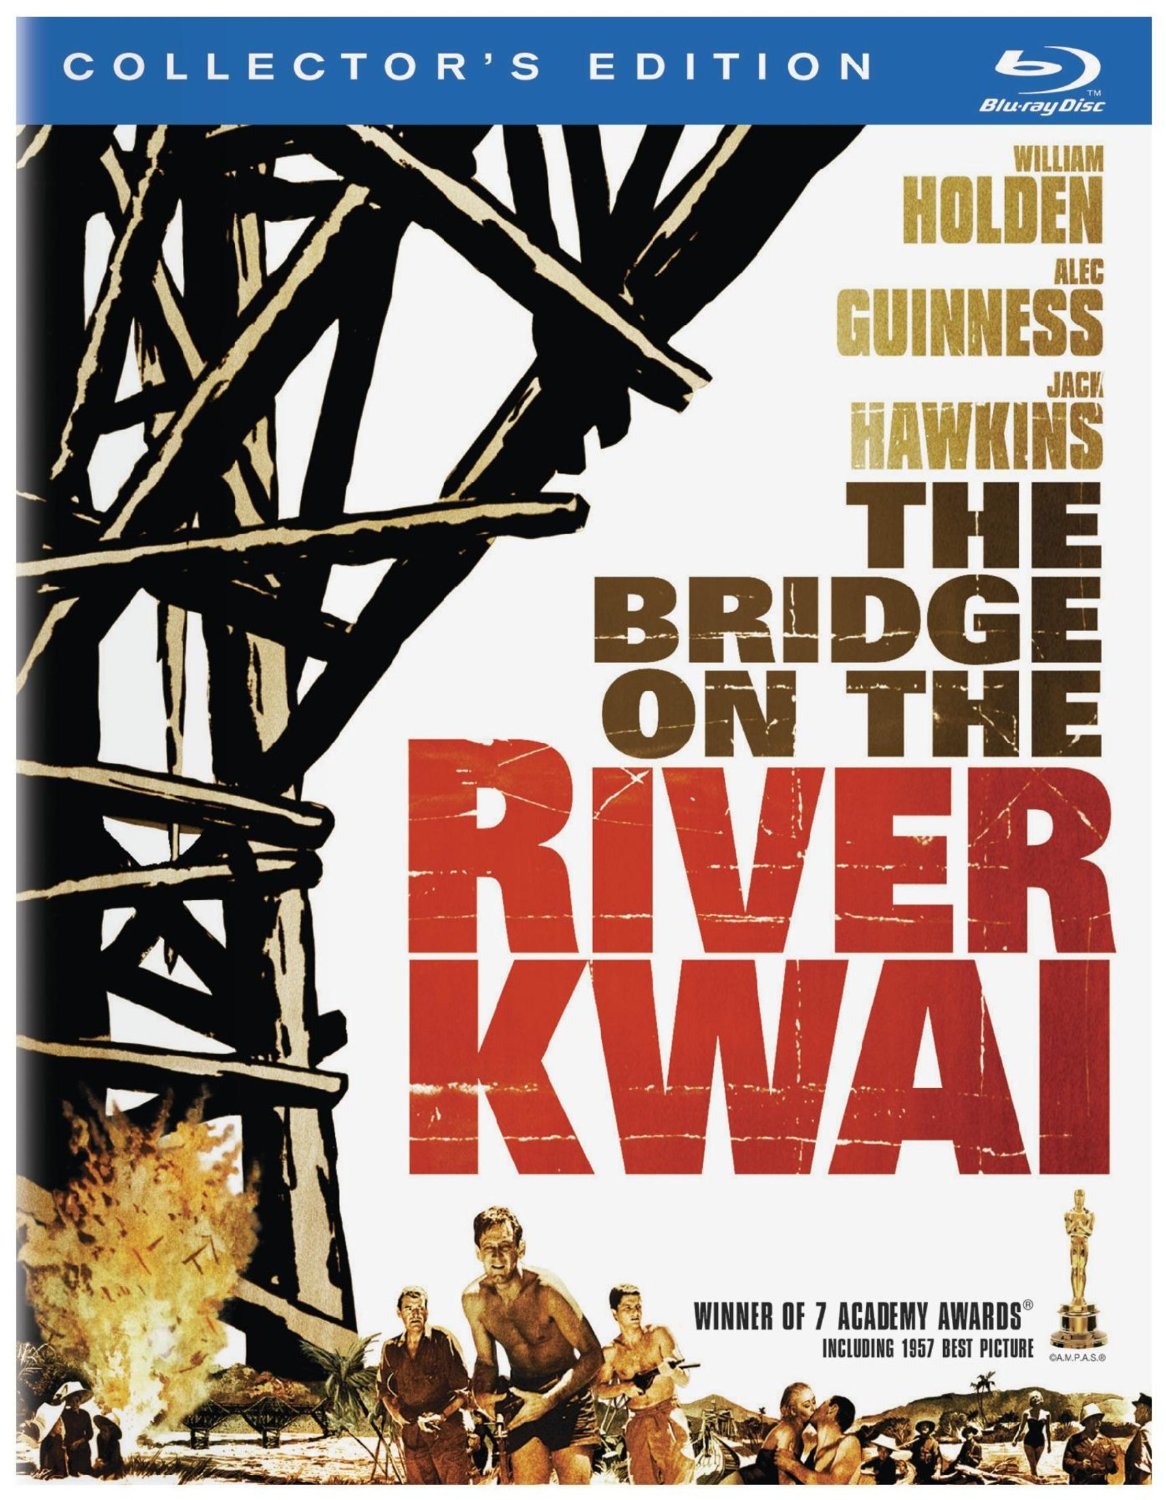 Bridge on the River Kwai, The